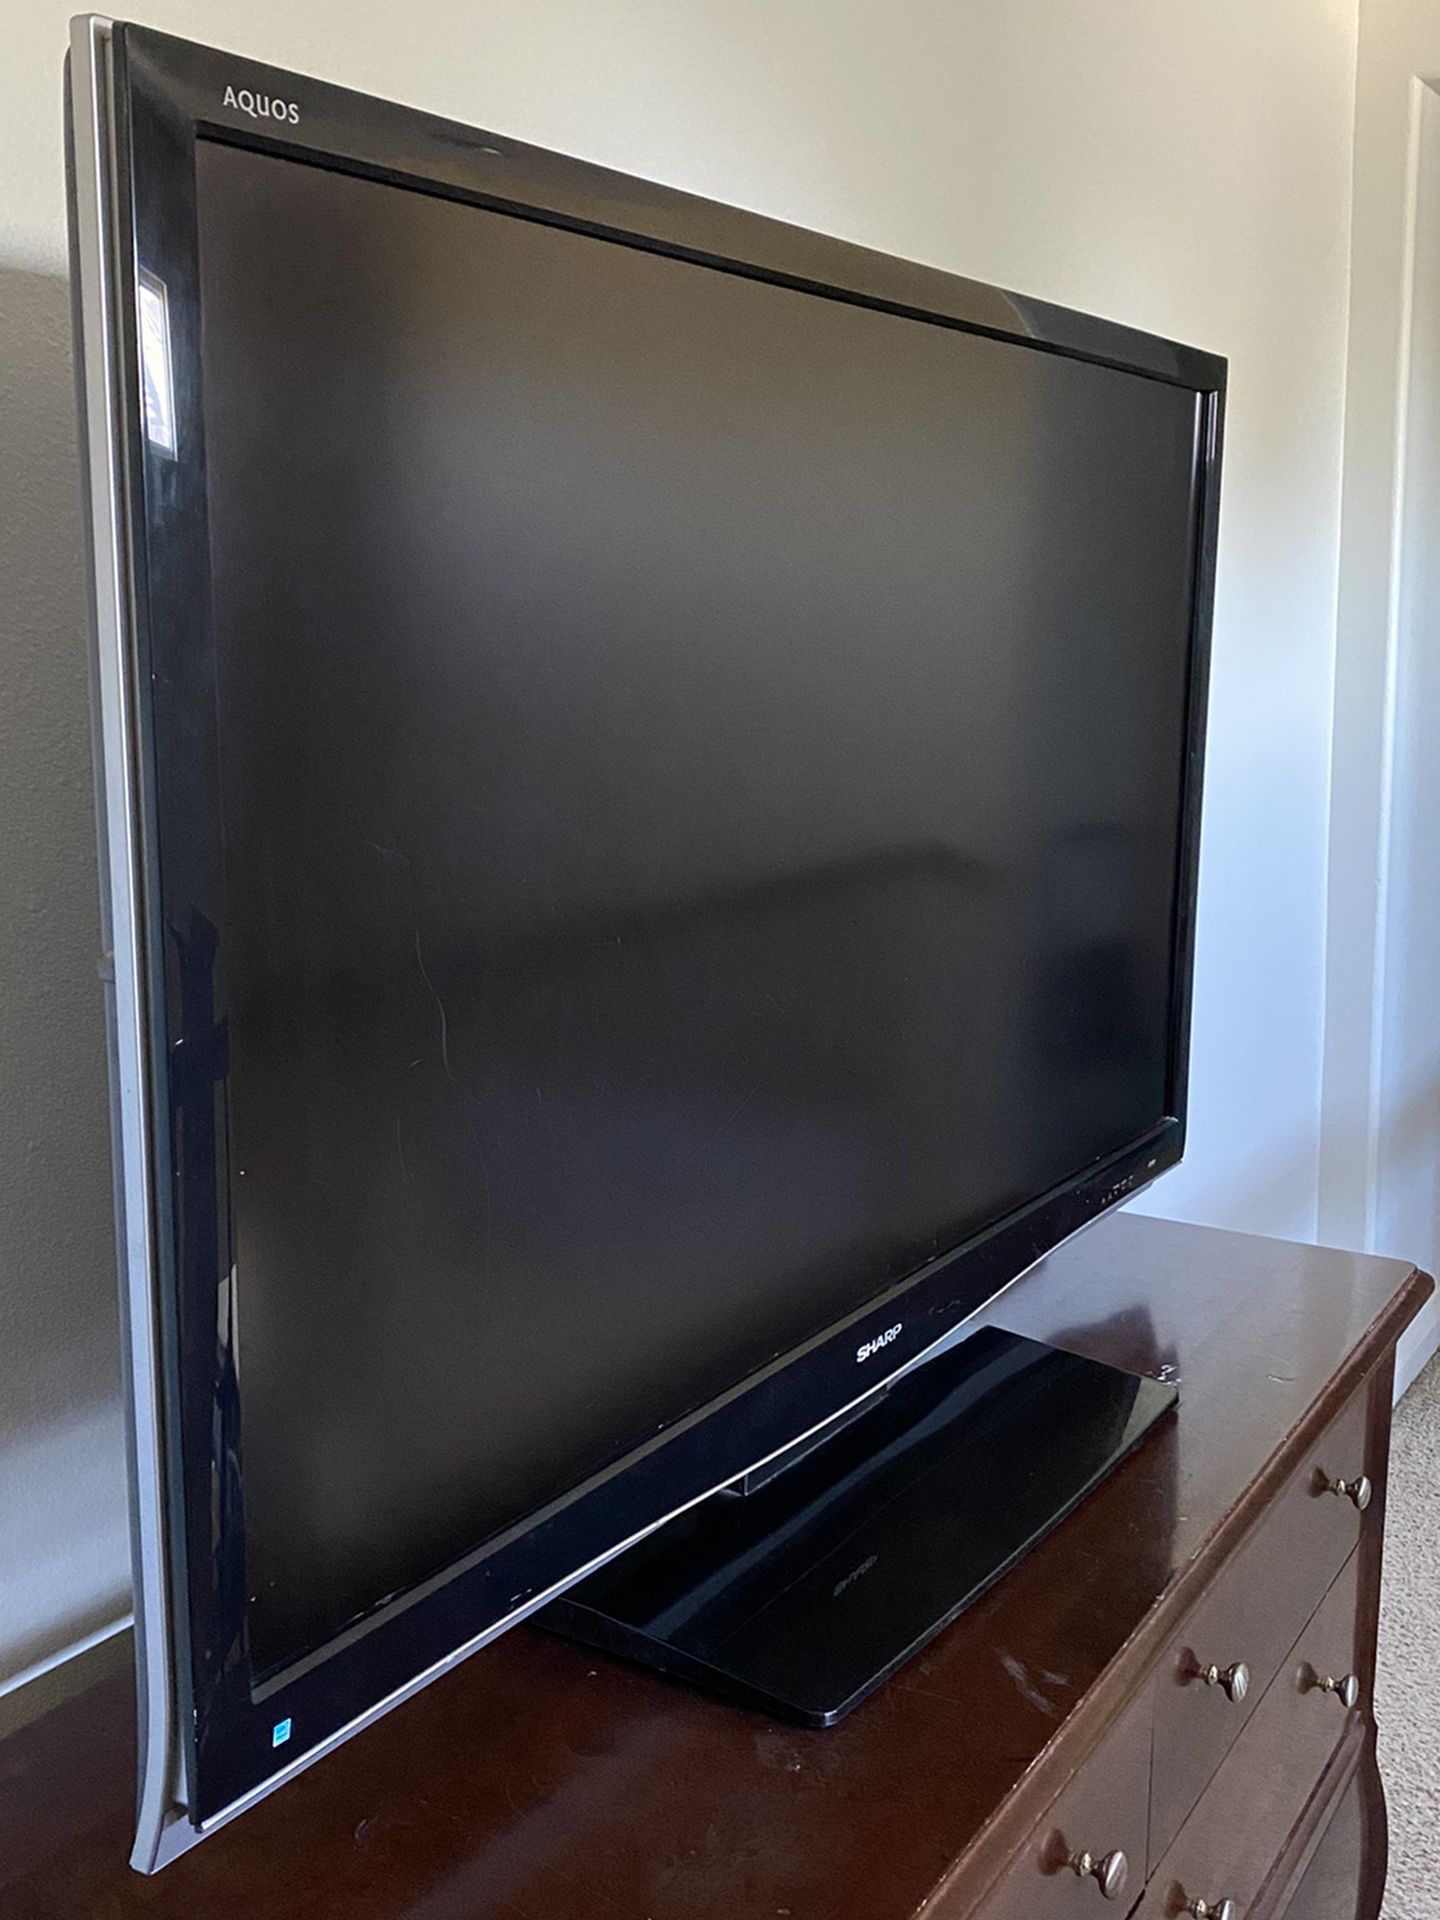 52 inch Sharp TV